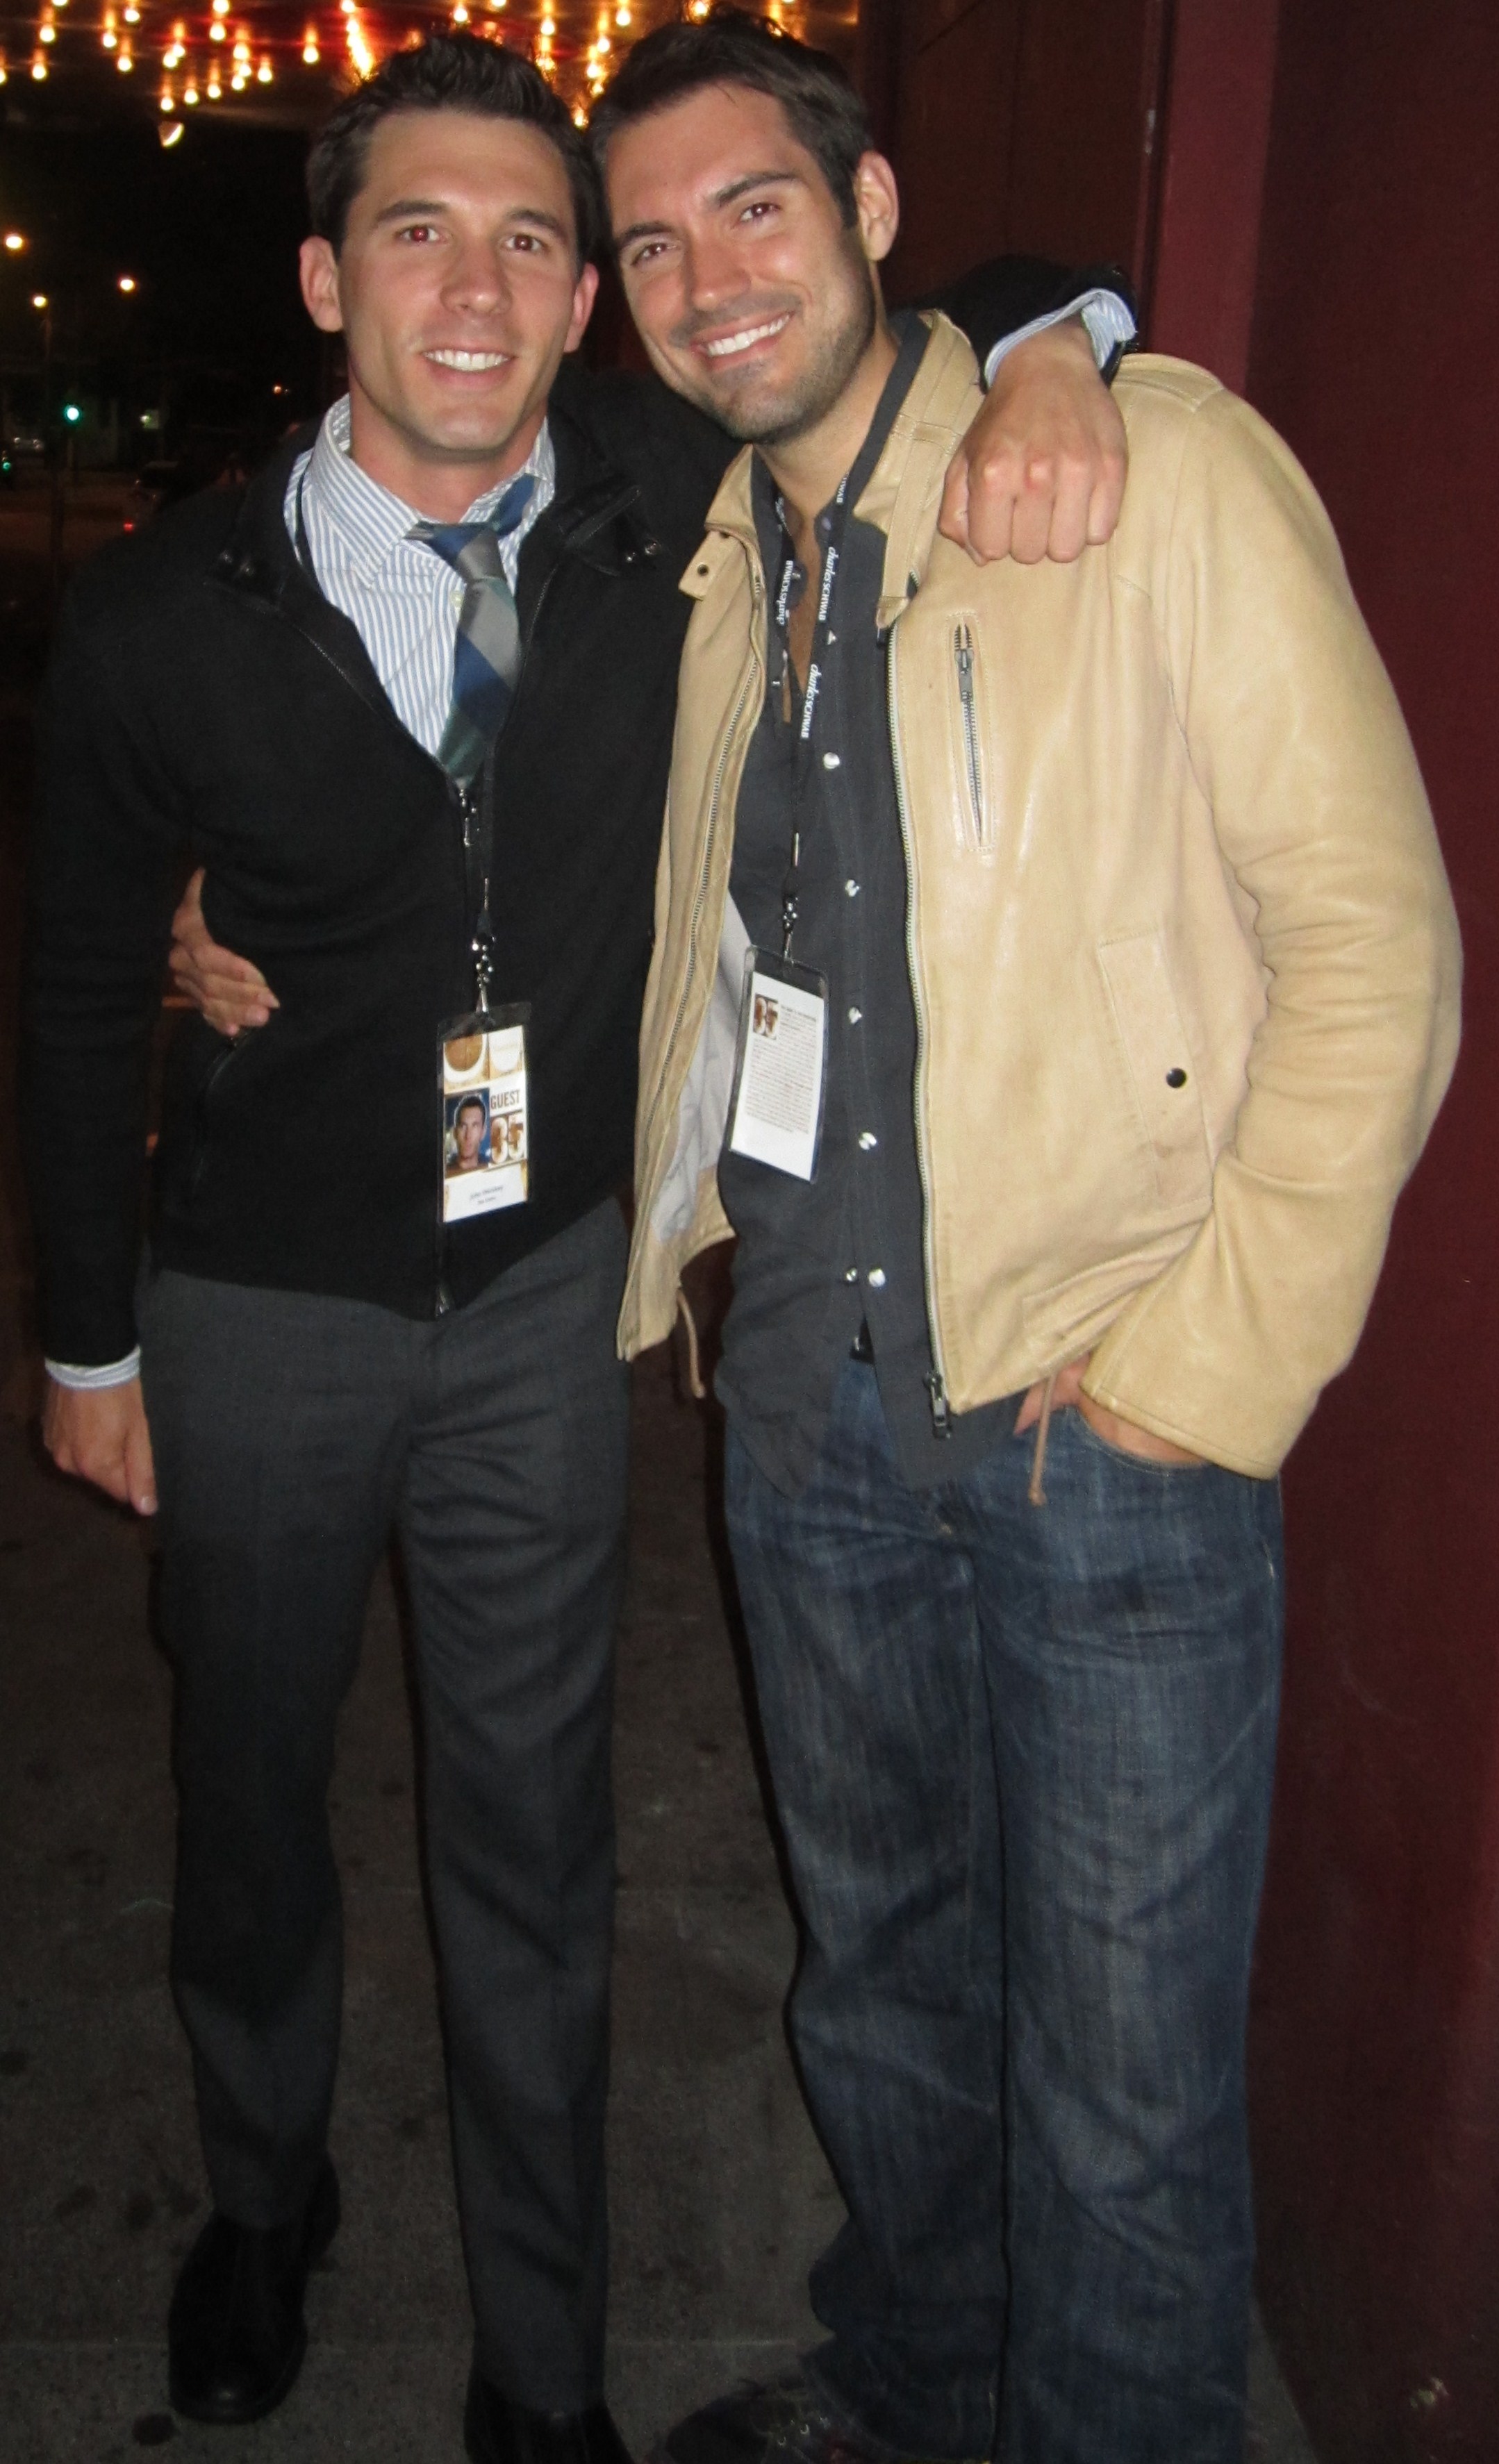 World premier of BITE MARKS at FRAMELINE FILM FESTIVAL in San Francisco, CA June 2011 with Co-star Benjamin Lutz.